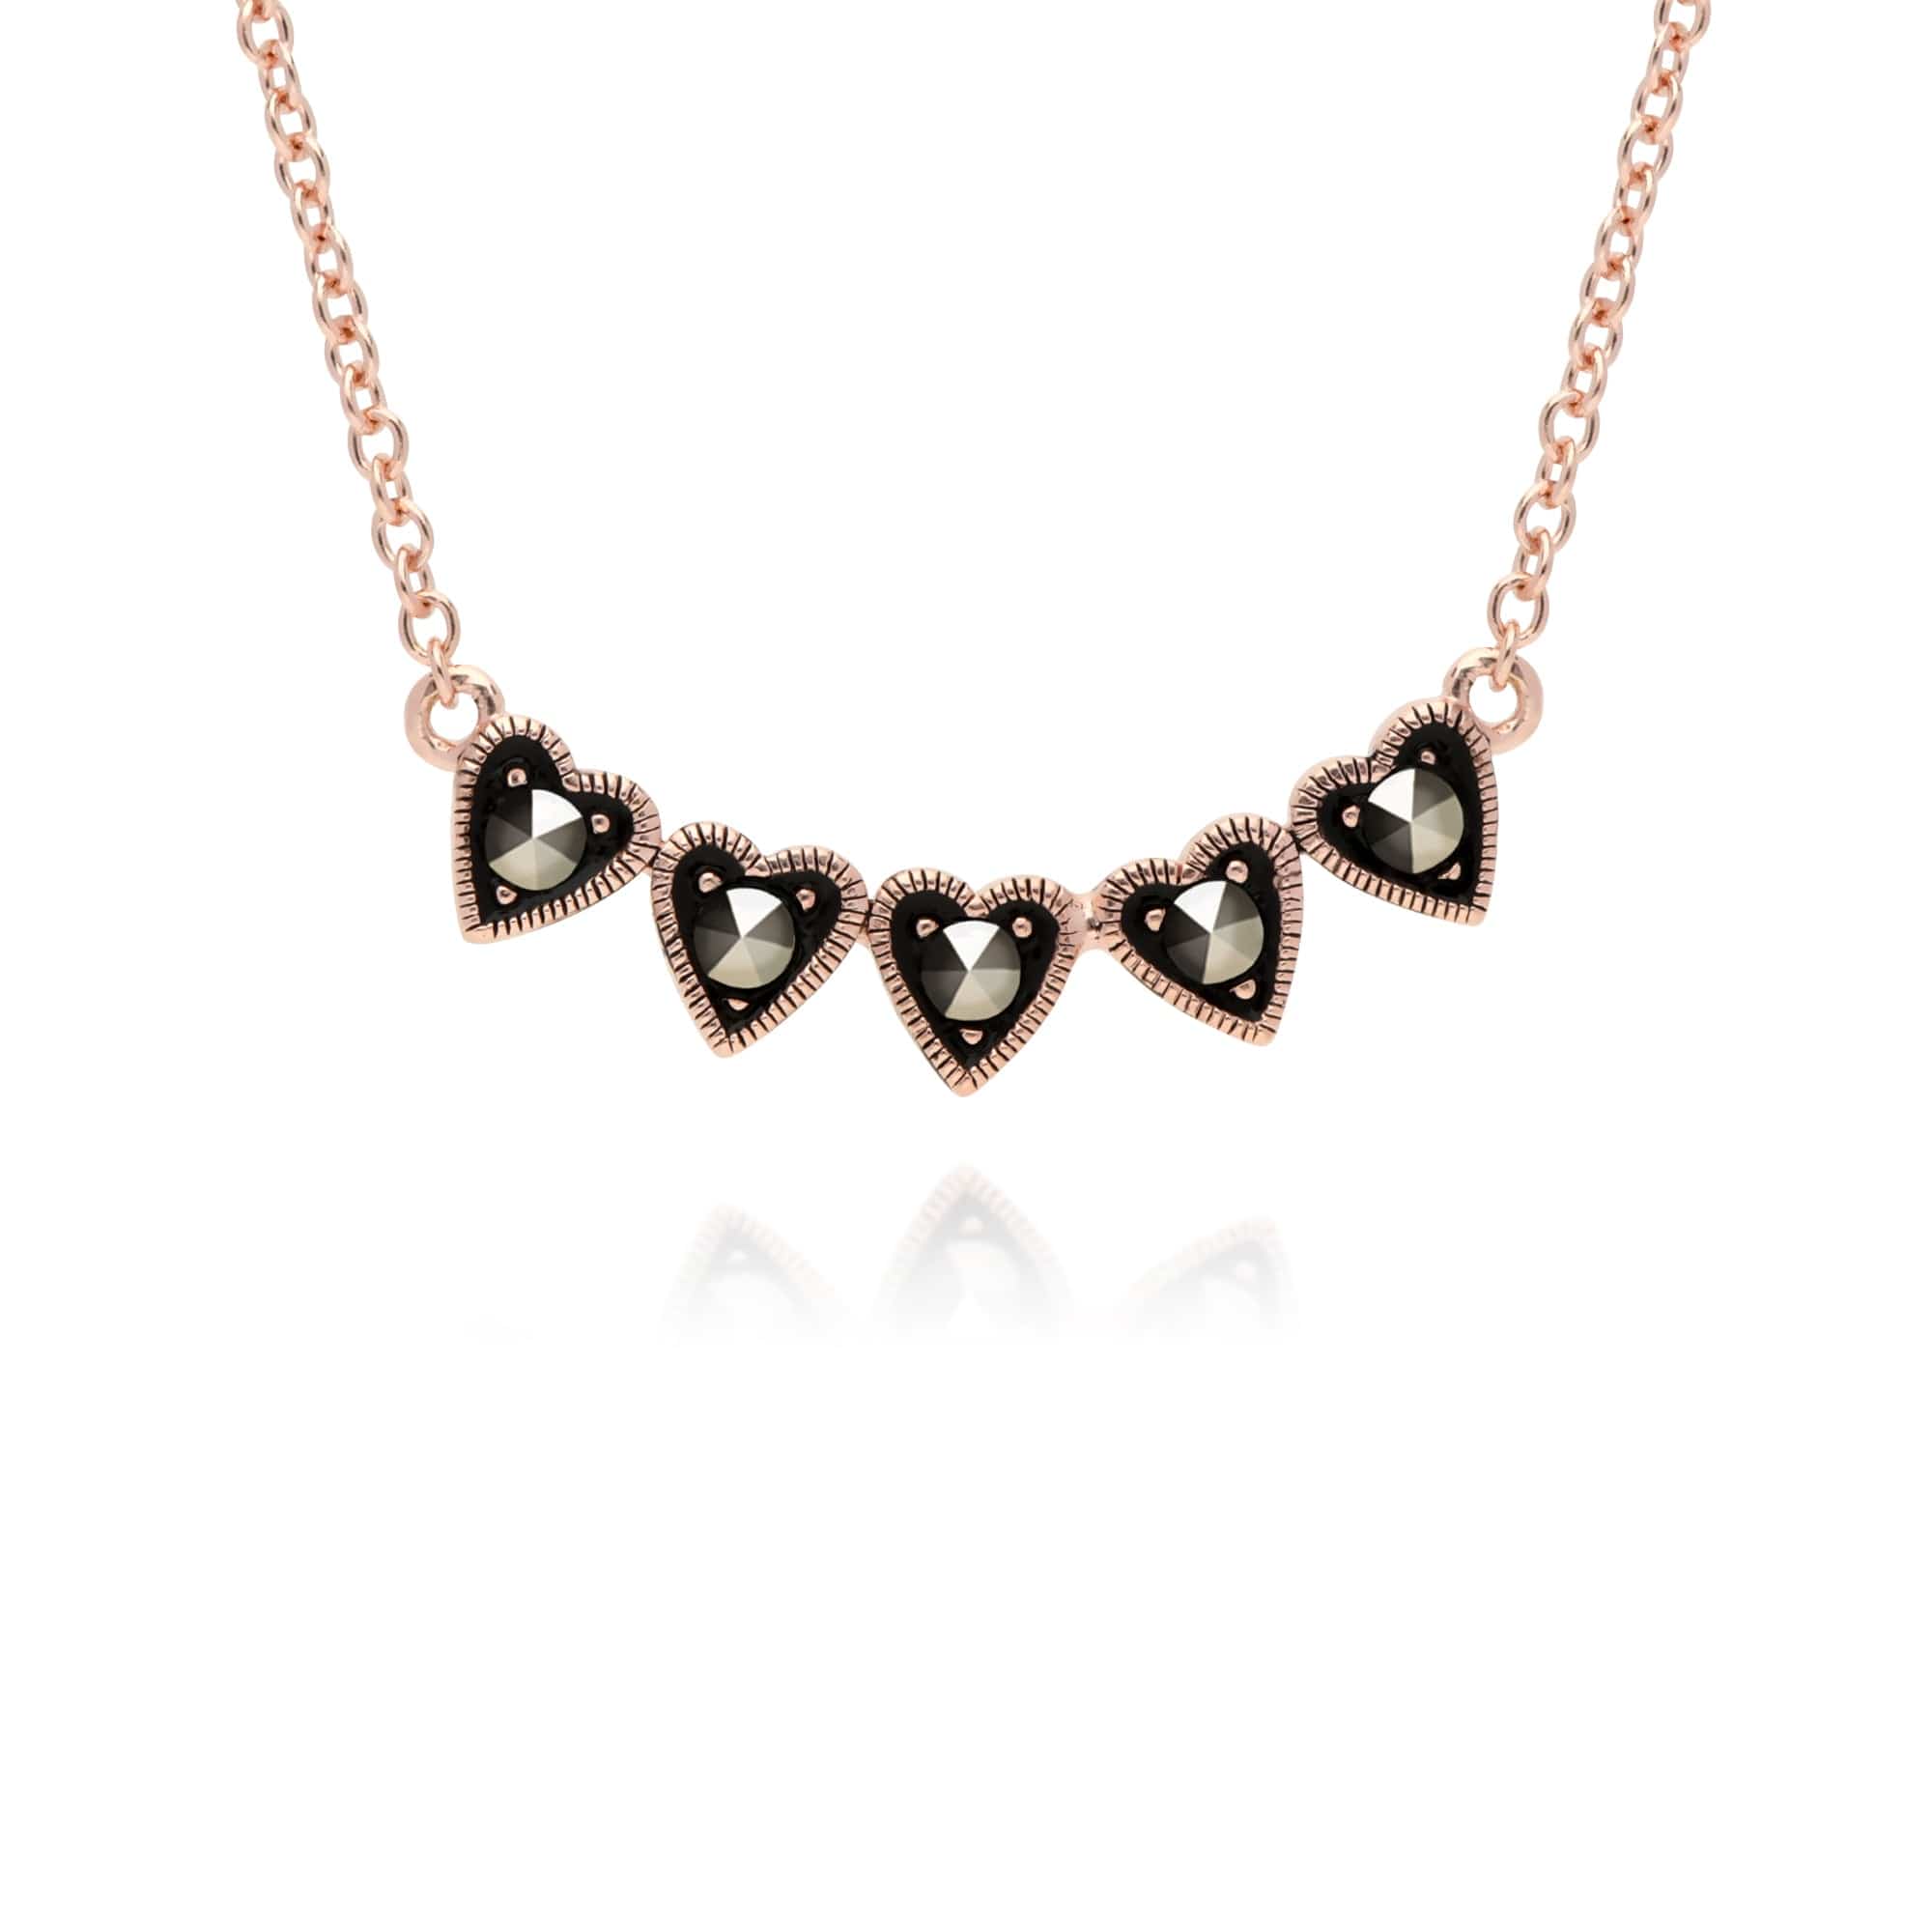 224N017601925-224L008101925 Rose Gold Plated Marcasite Heart Bracelet & Necklace Set in 925 Sterling Silver 2